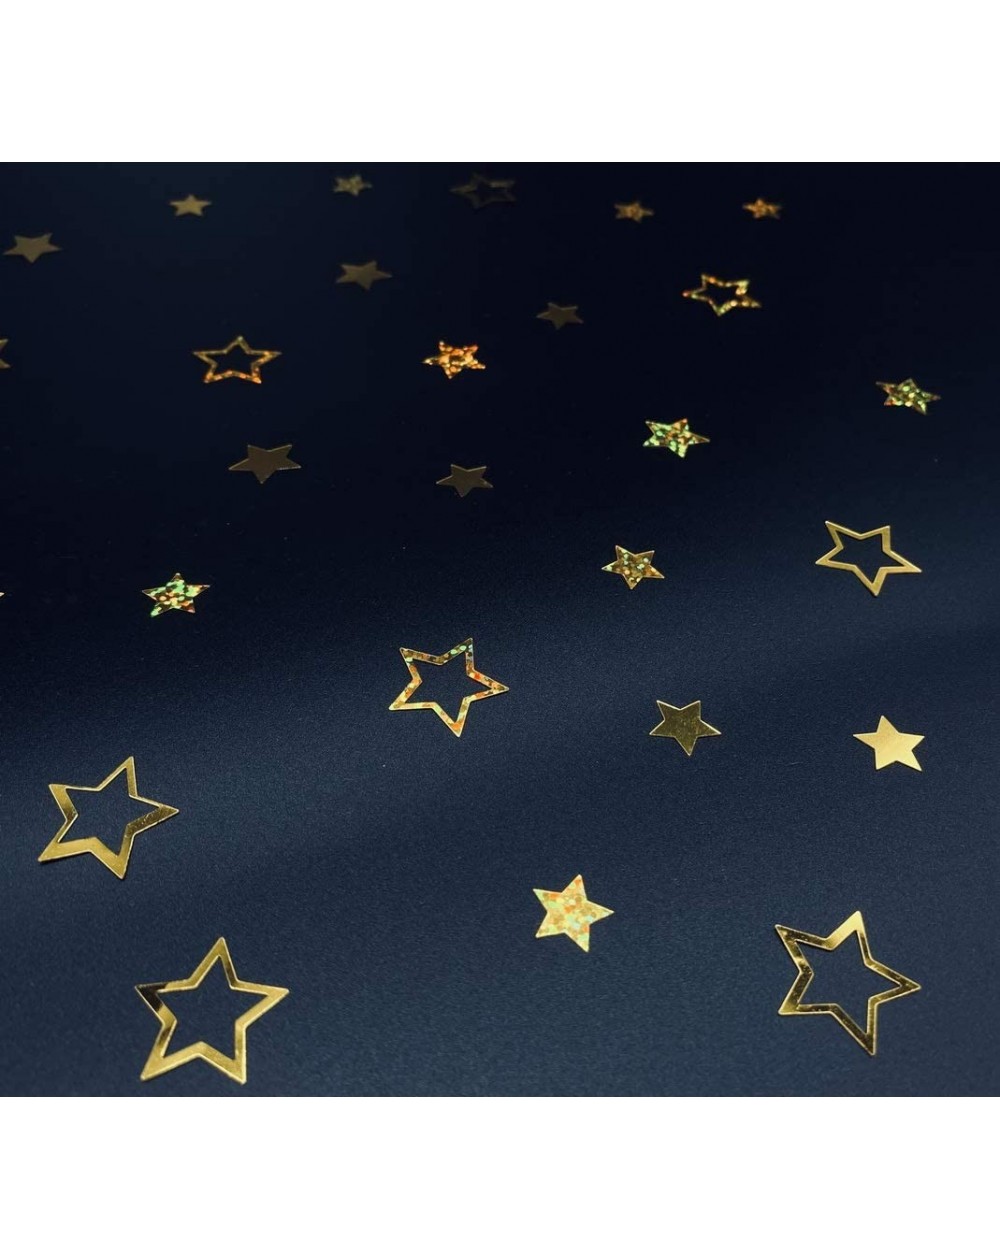 Confetti Star Confetti Glitter Star Table Confetti Metallic Foil Stars Sprinkles for Birthday Christmas New Year Baby Shower ...